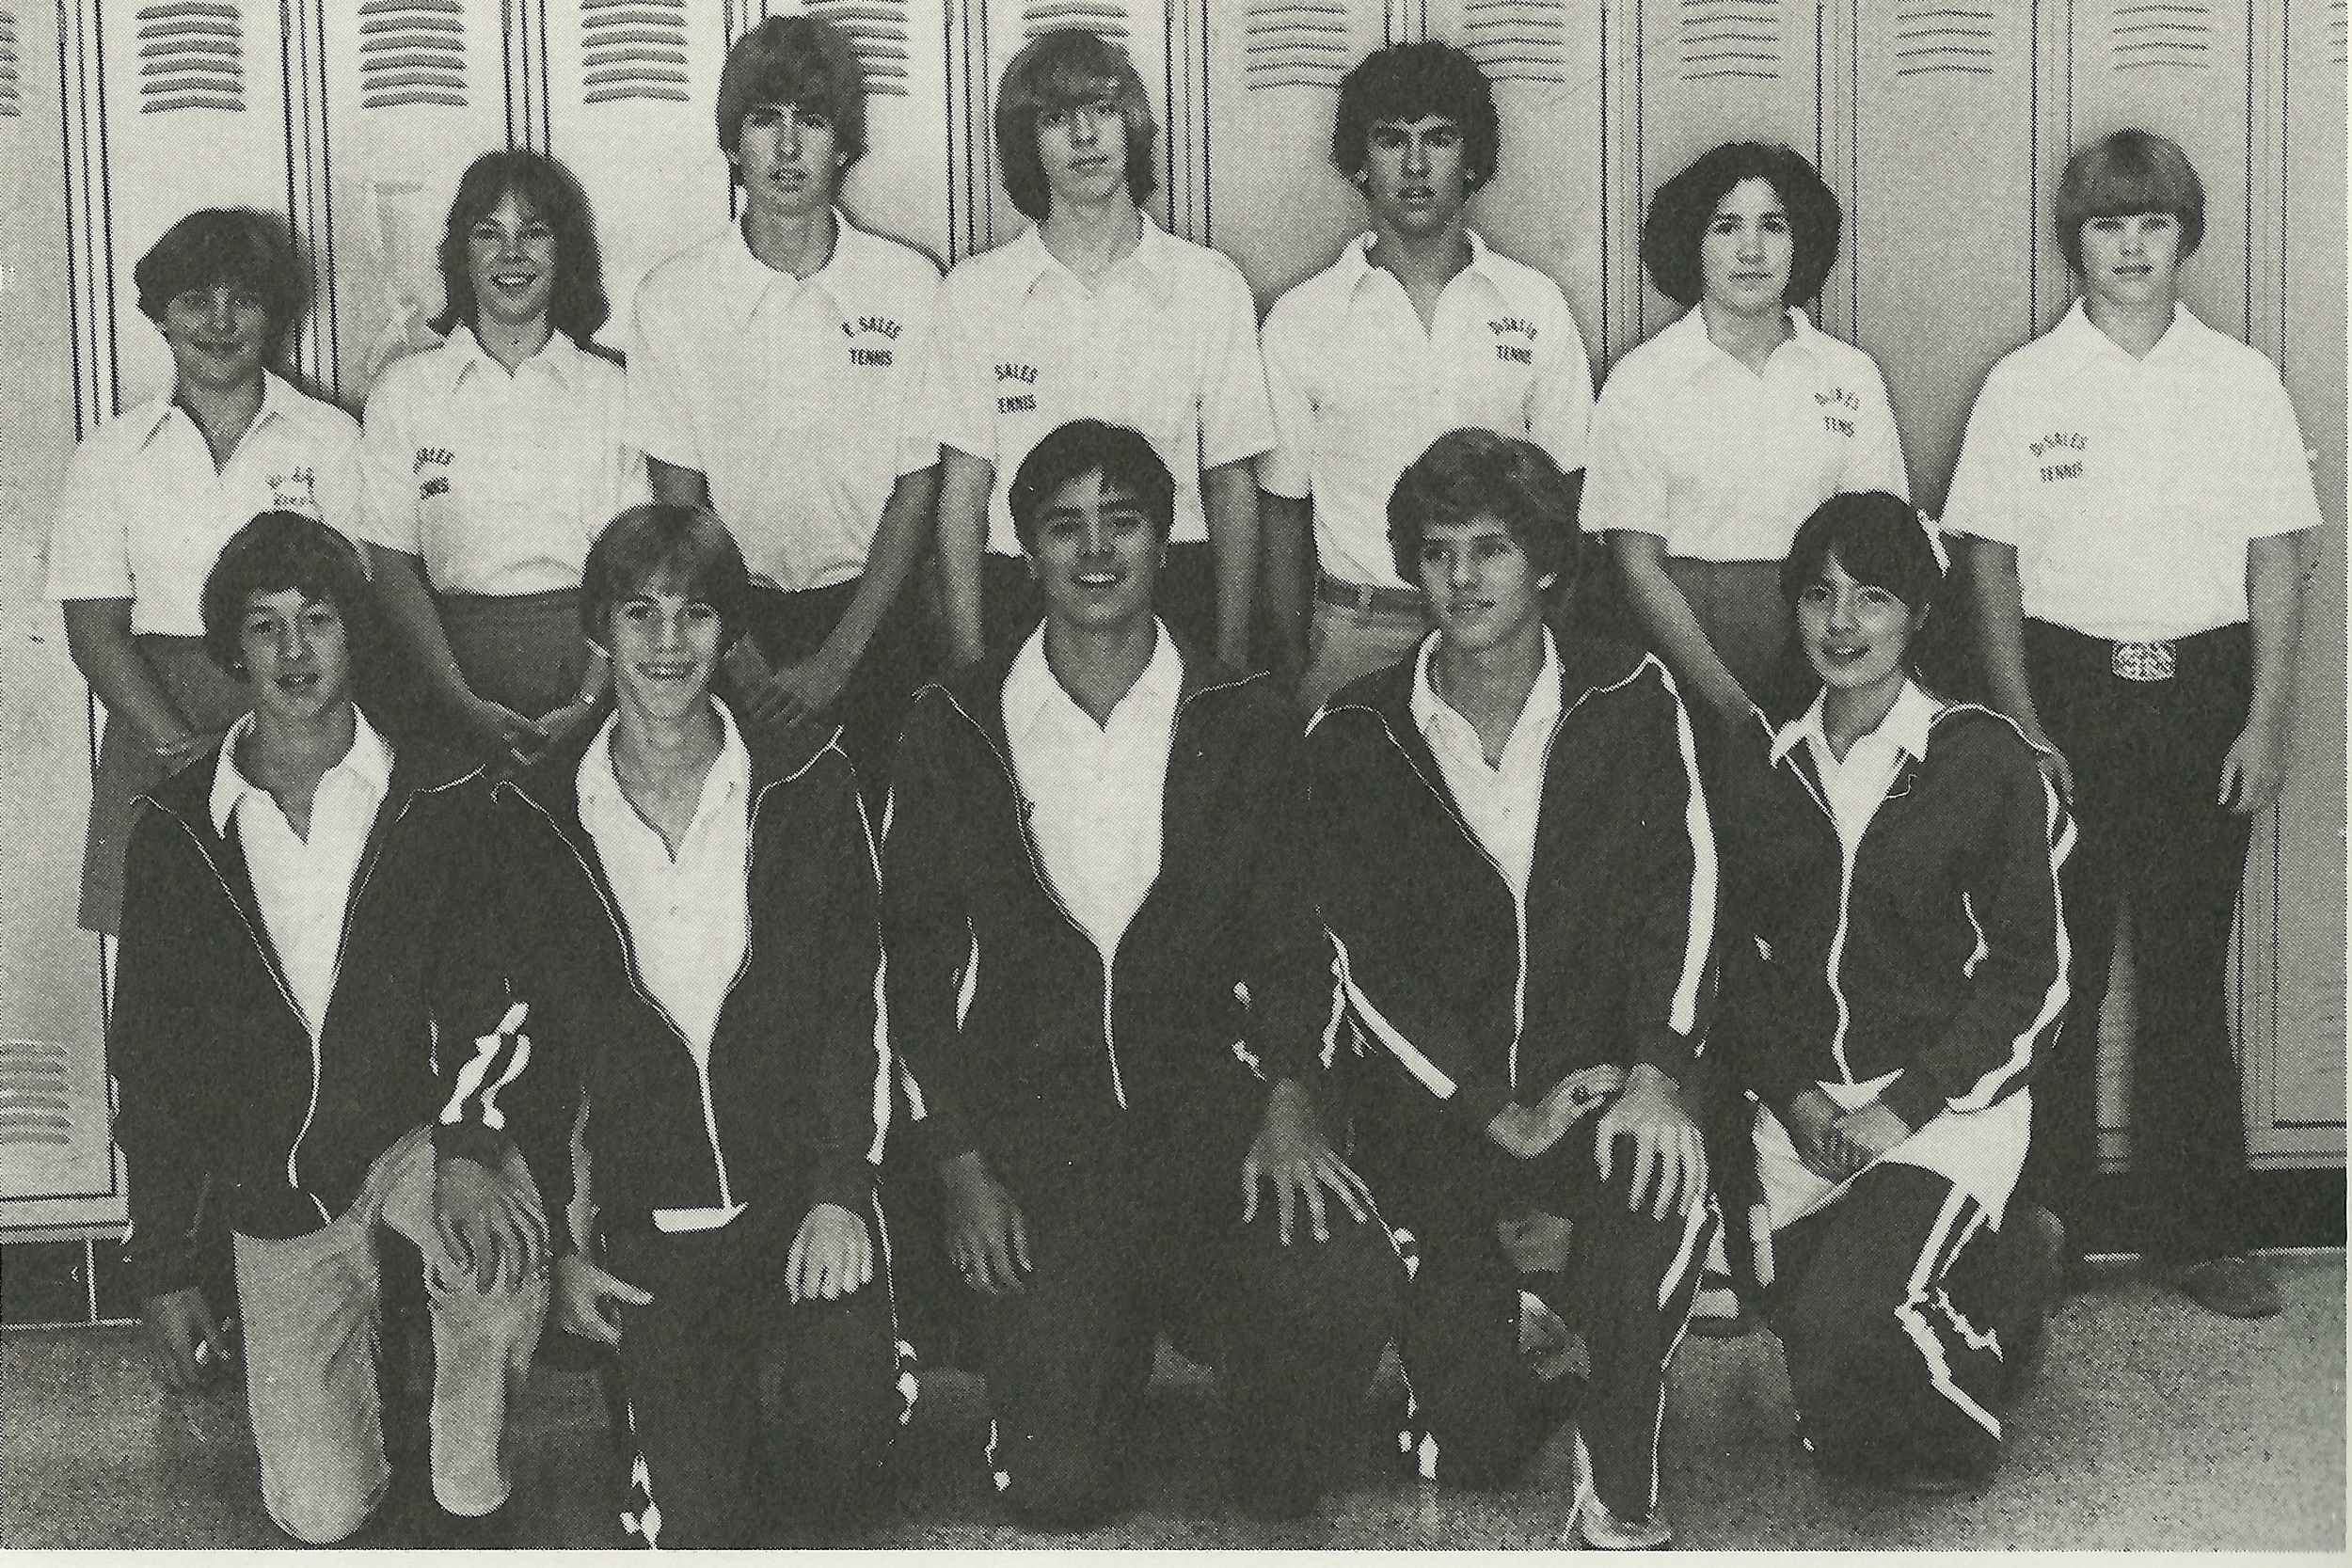 1979 Team Photo